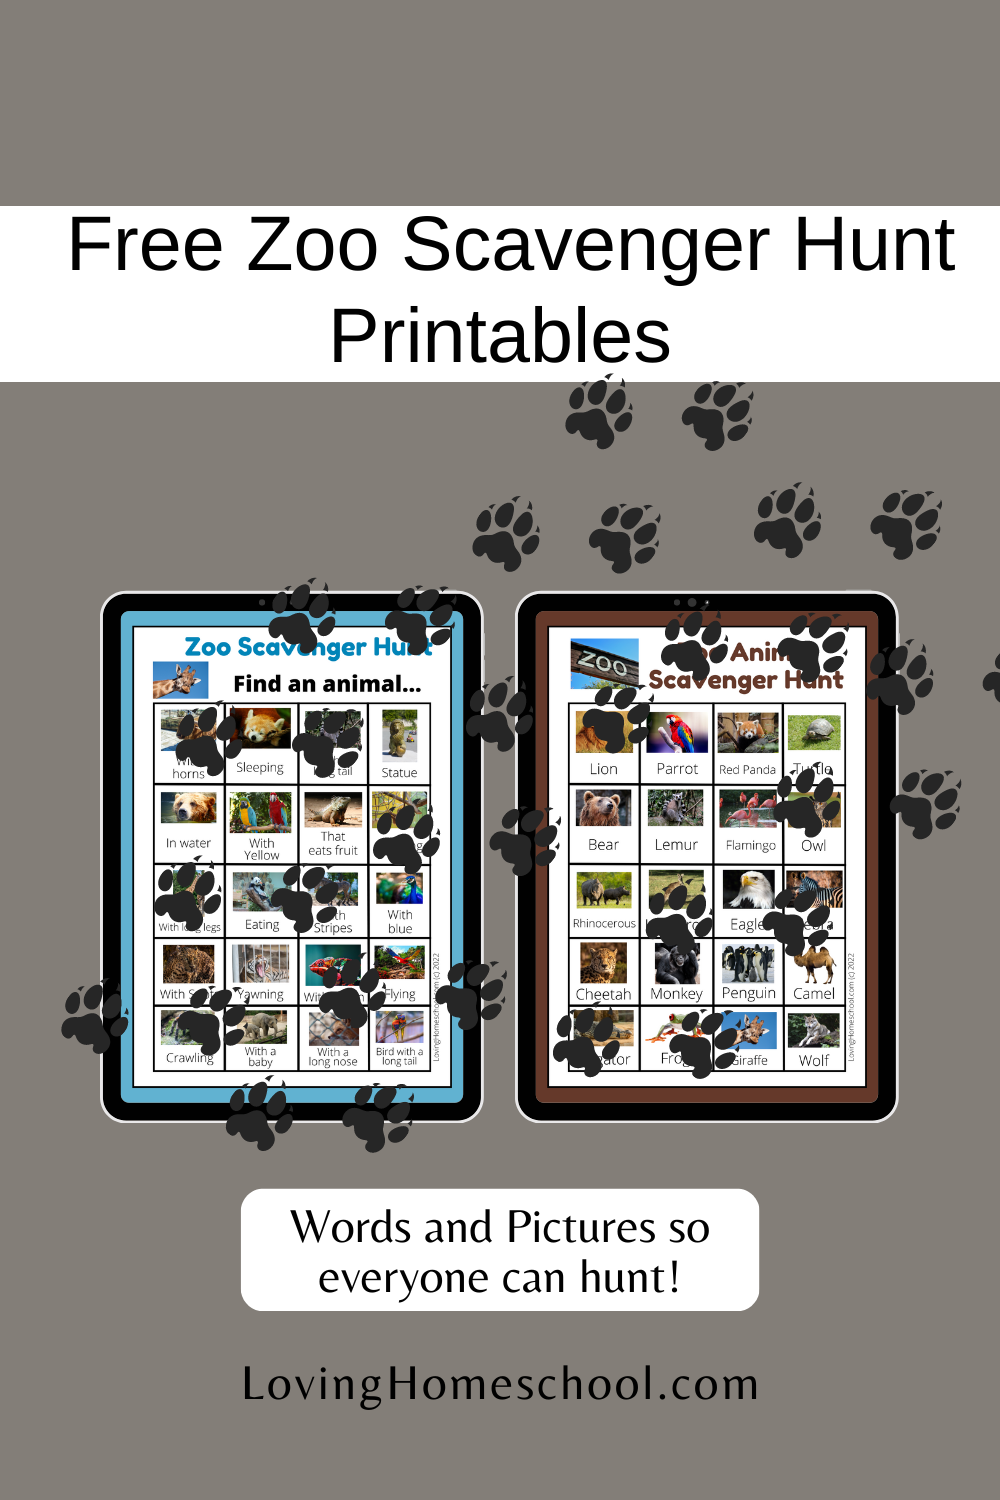 Free Zoo Scavenger Hunt Printables Pinterest Pin